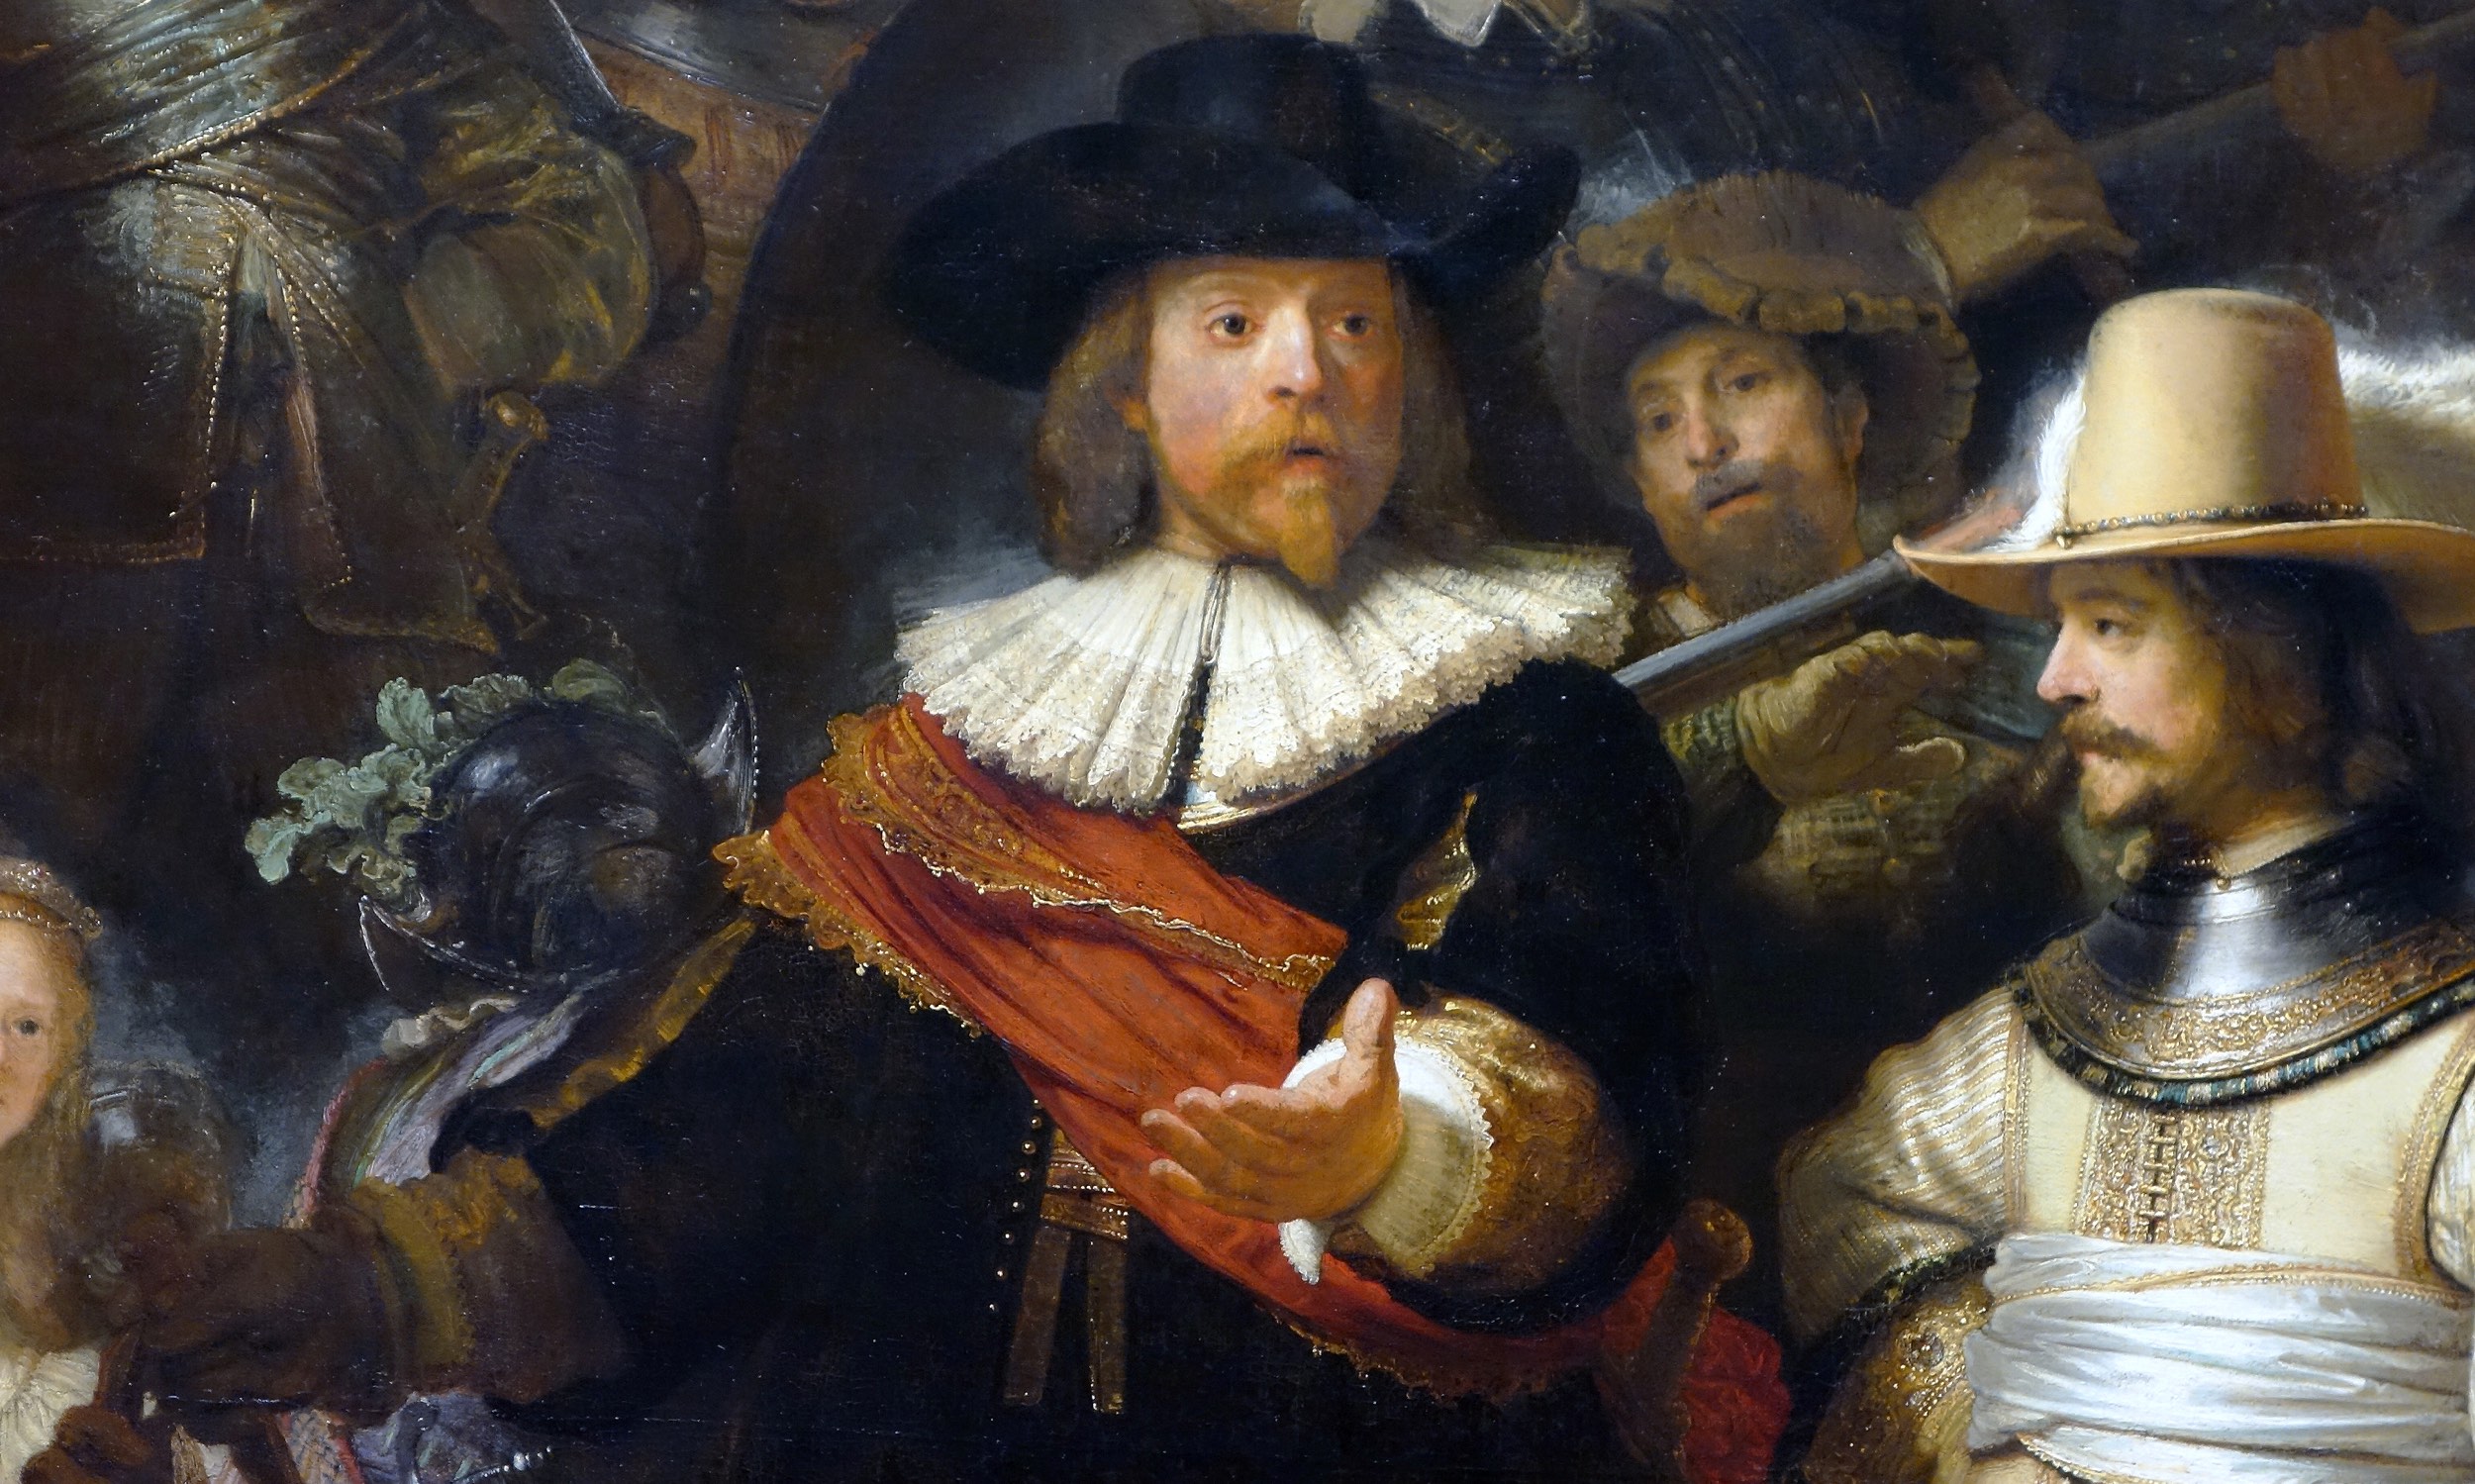 Rembrandt van Rijn, The Night Watch (Militia Company of District II under the Command of Captain Frans Banninck Cocq), 1642, oil on canvas, 379.5 x 453.5 cm (Rijksmuseum, Amsterdam)